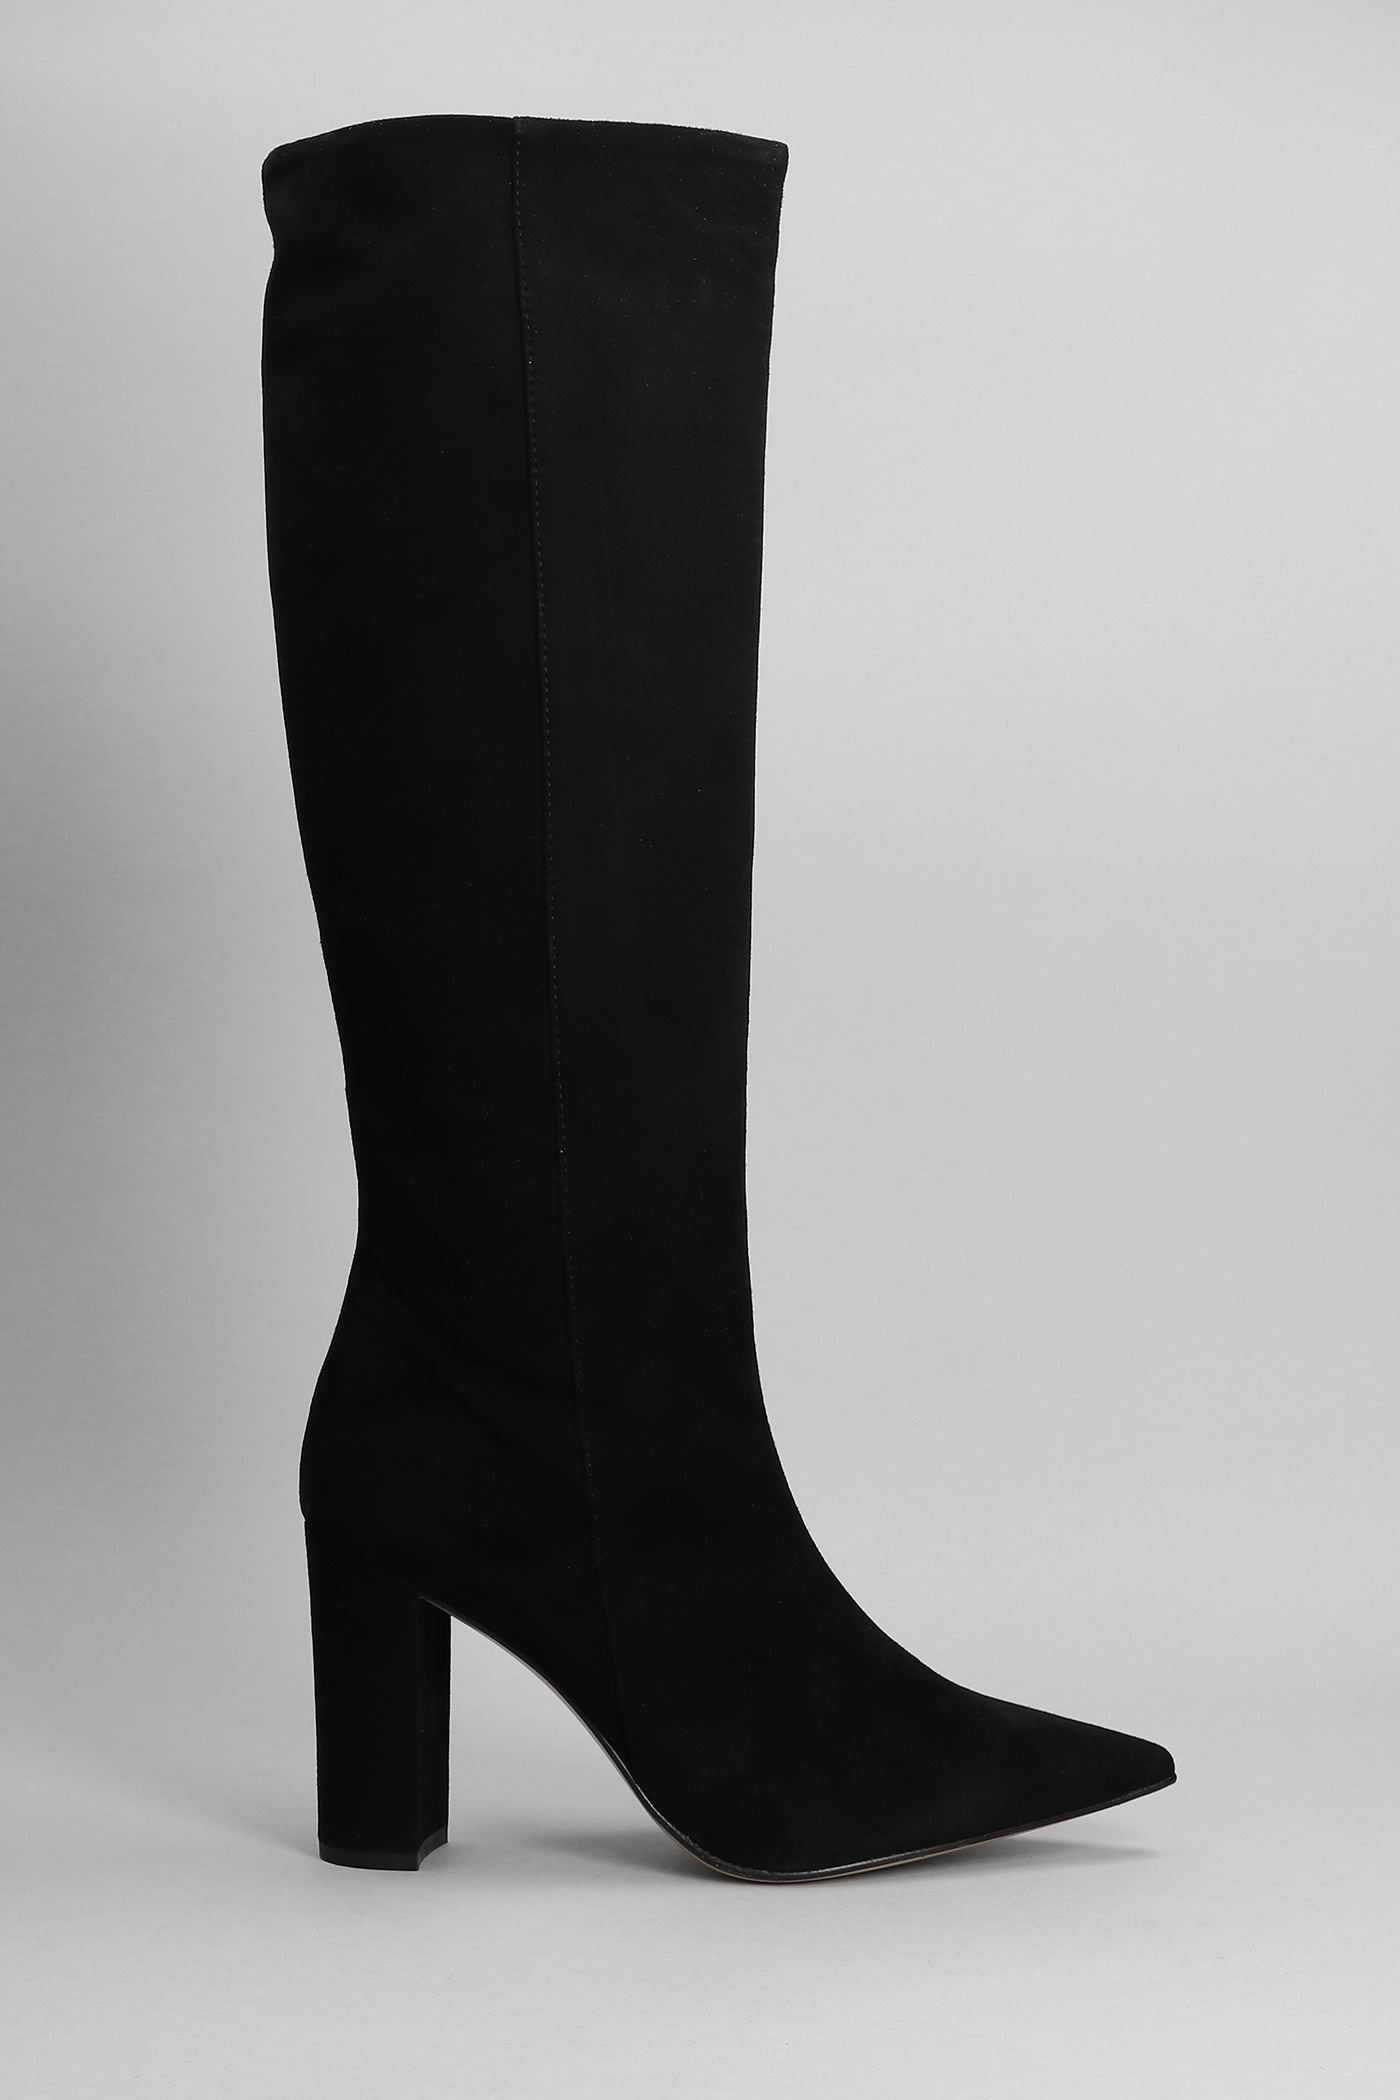 Alchimia High Heels Boots In Black Suede